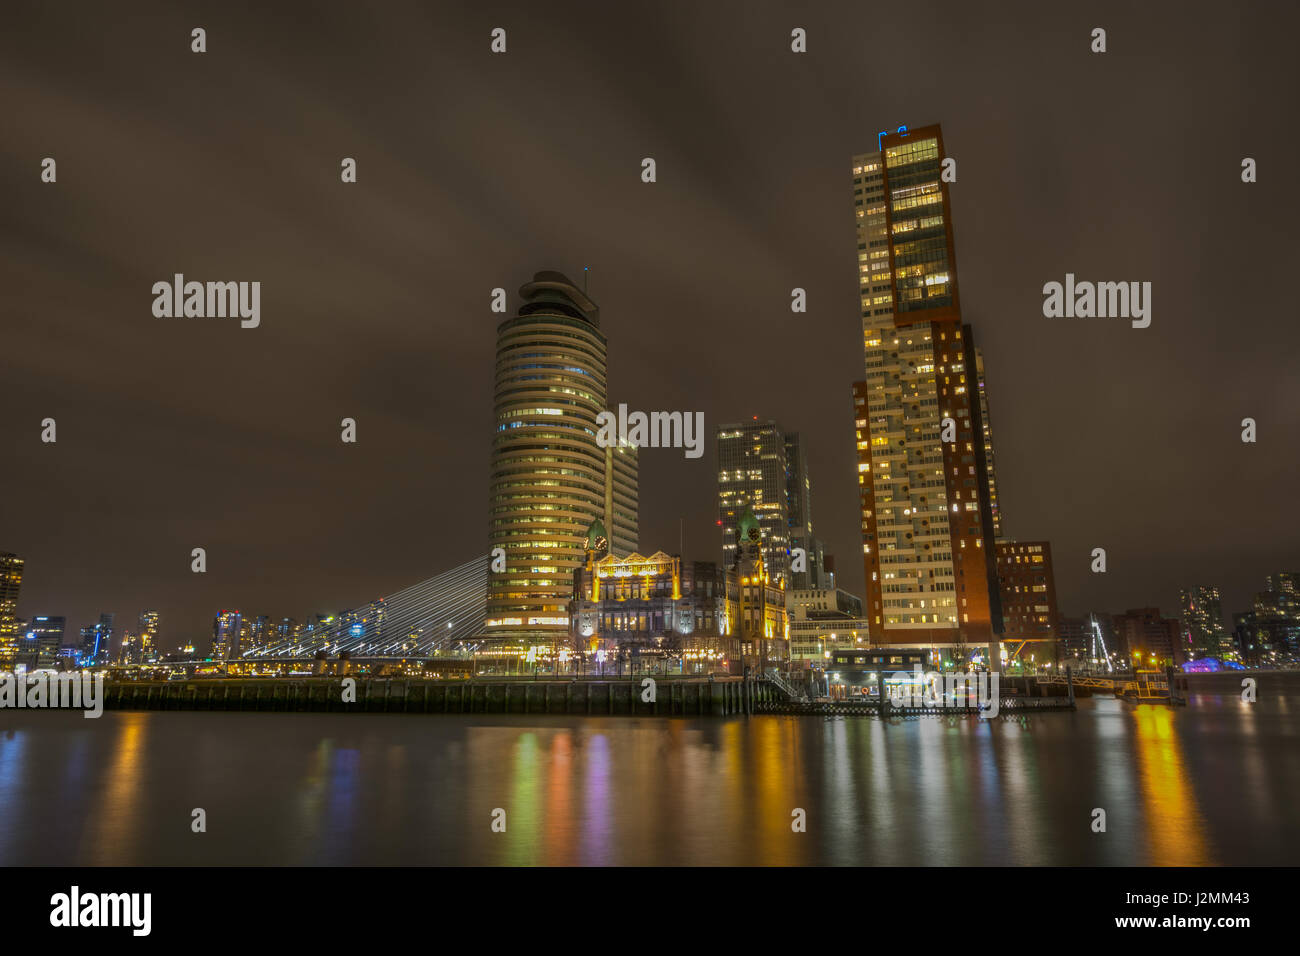 L'hotel new york e Kop van Zuid a Rotterdam, Paesi Bassi, visto di notte da katendrecht Foto Stock